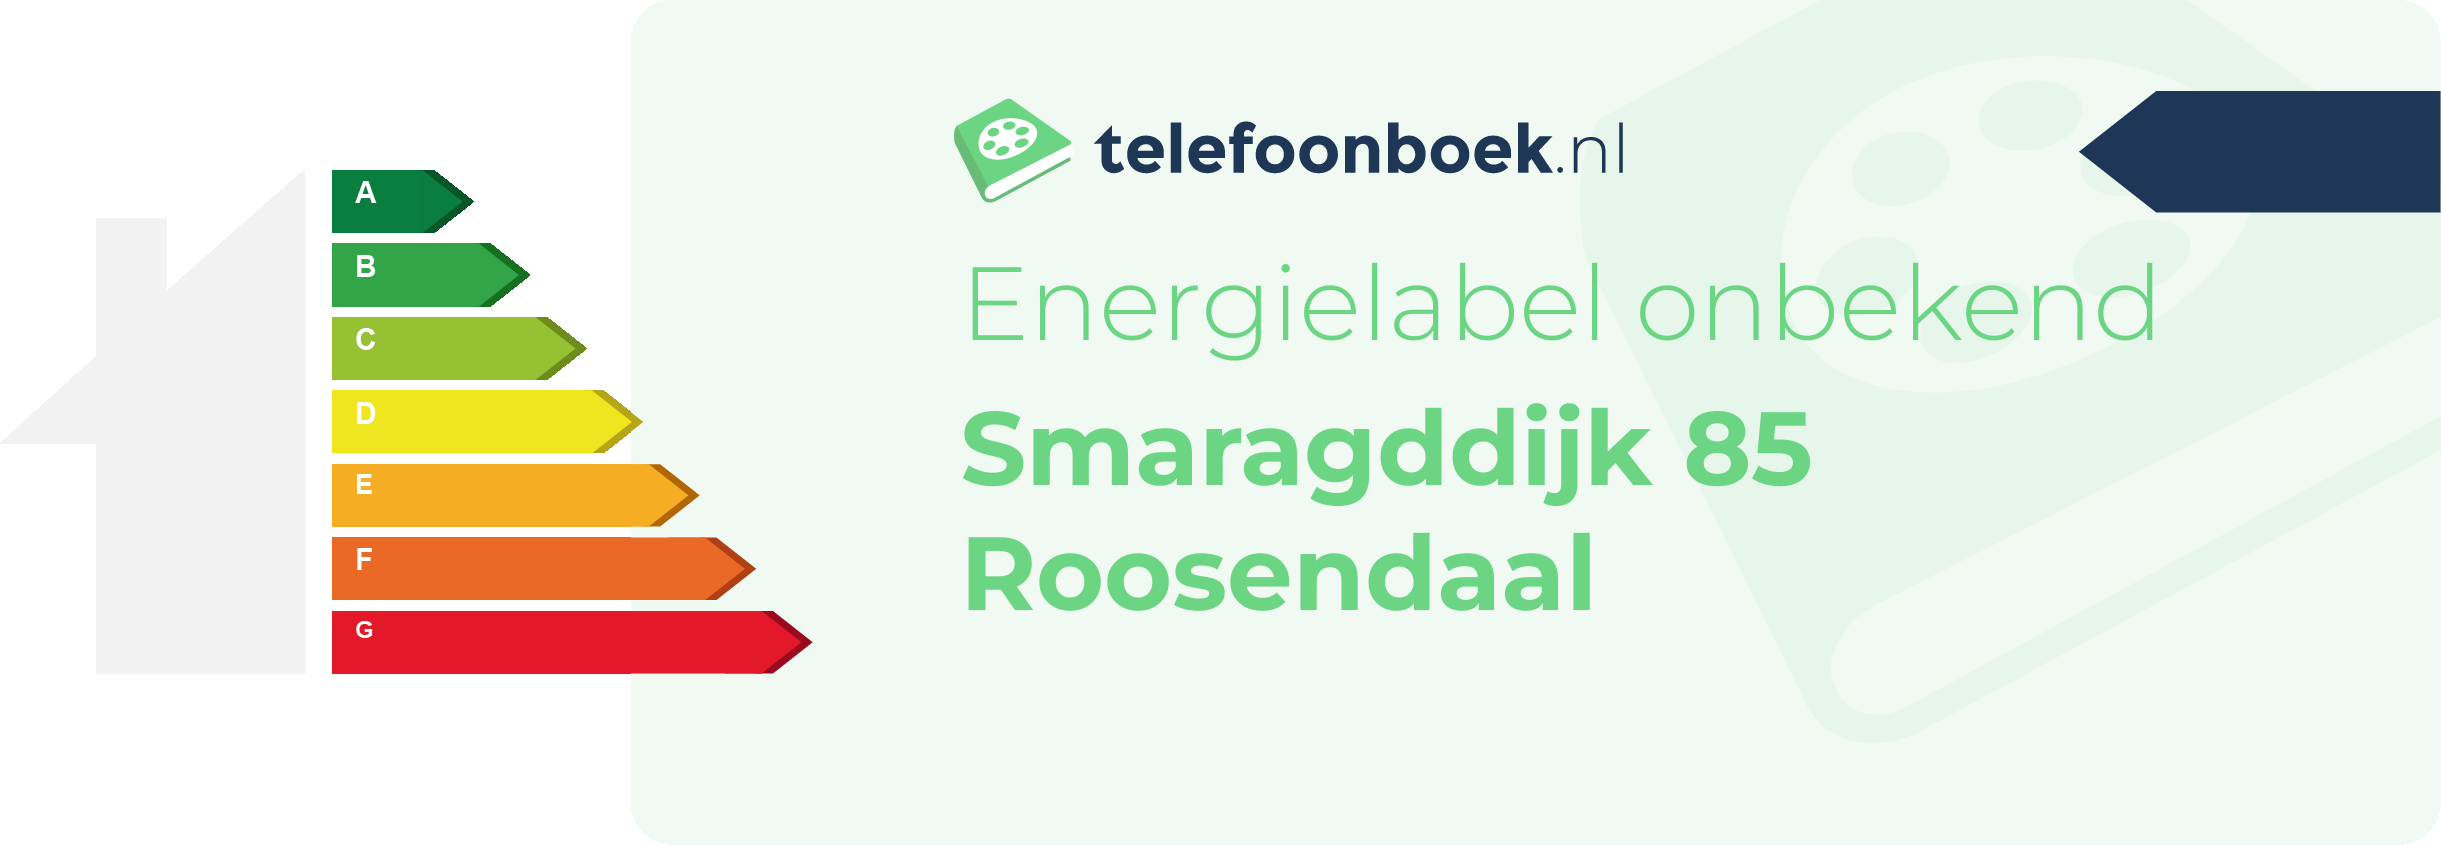 Energielabel Smaragddijk 85 Roosendaal